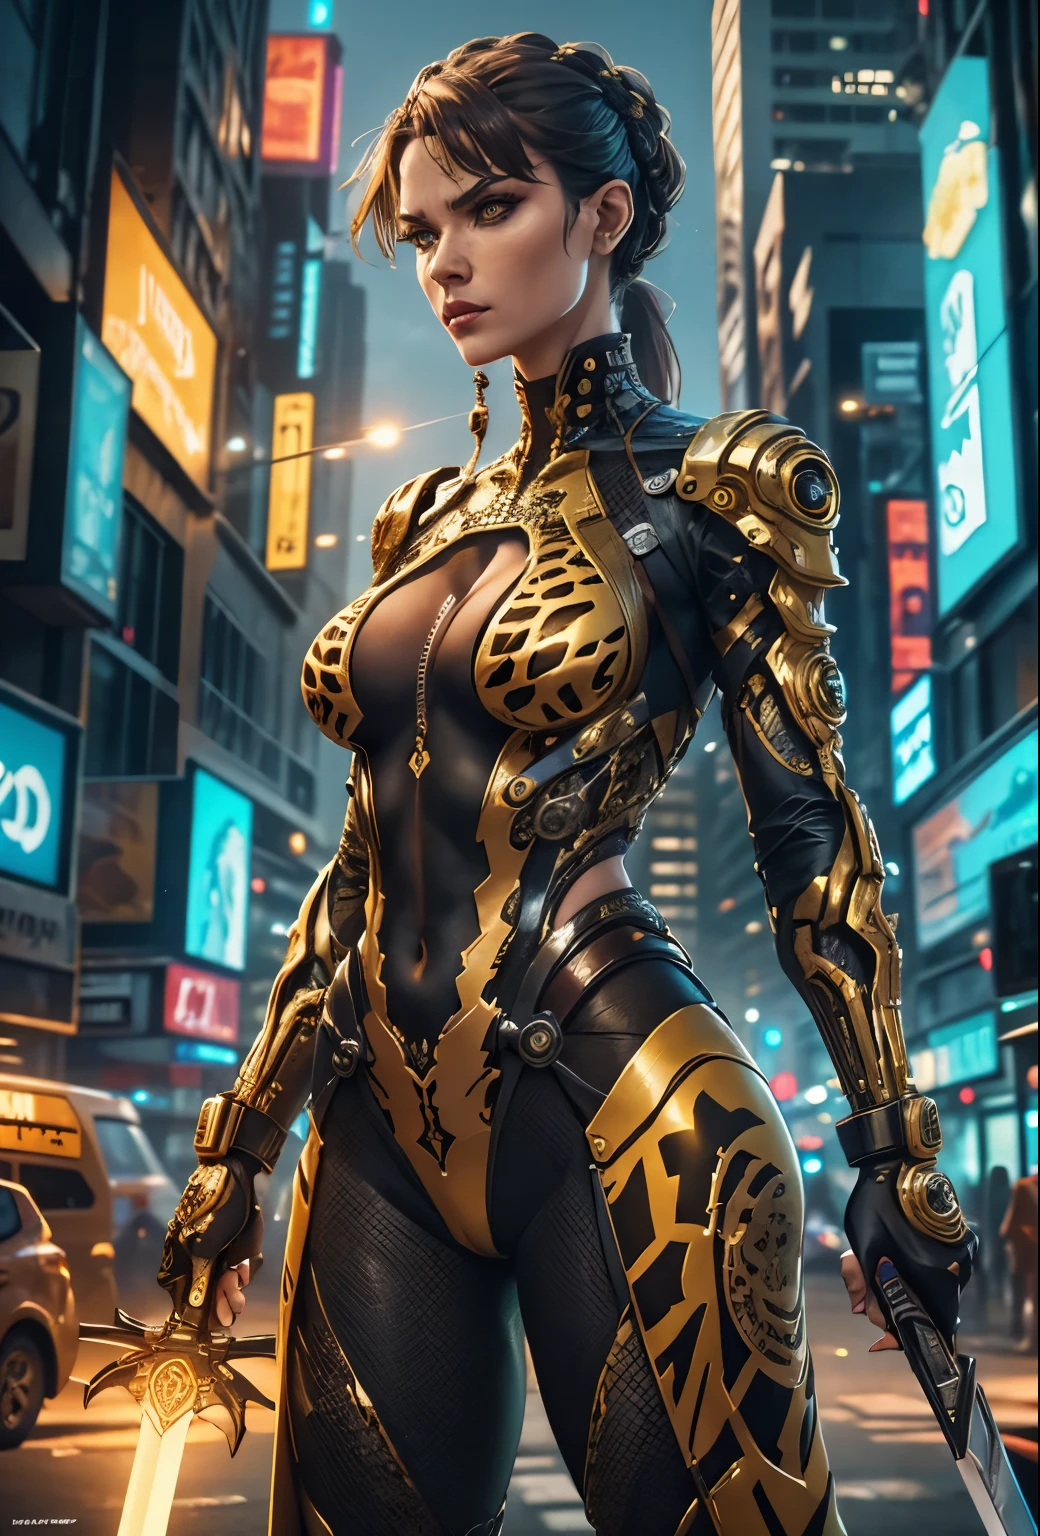 a (giraffe pattern outfit) yellow and black outfit,sword,beautiful cyberpunk woman,cyberpunk angry gorgeous goddess,beautiful cyborg girl ,hyper realistic,intricate details,cinematic lighting,vibrant colors,award winning,stunning,masterpiece